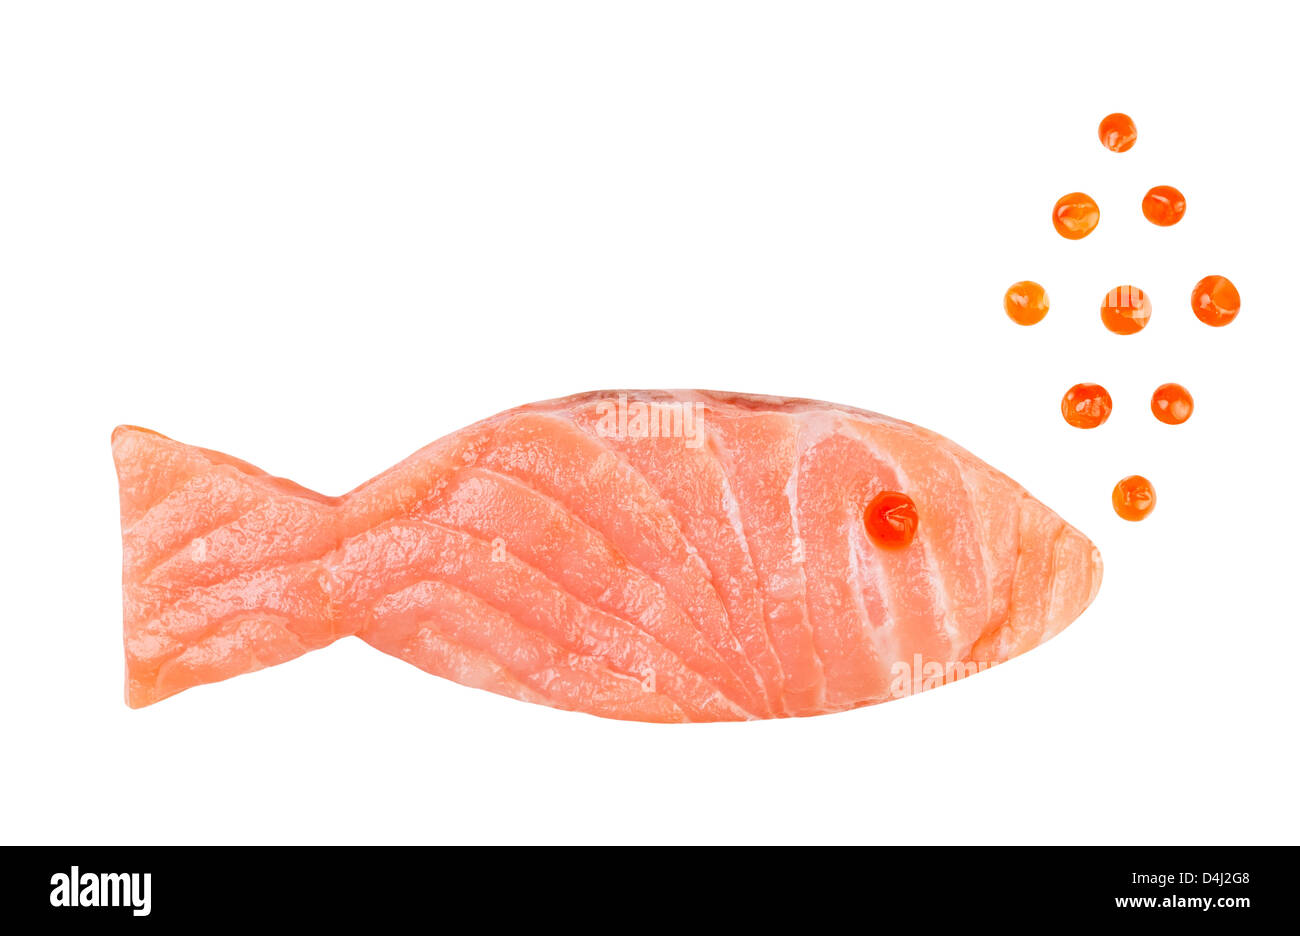 salmon slice caviar concept on white background Stock Photo